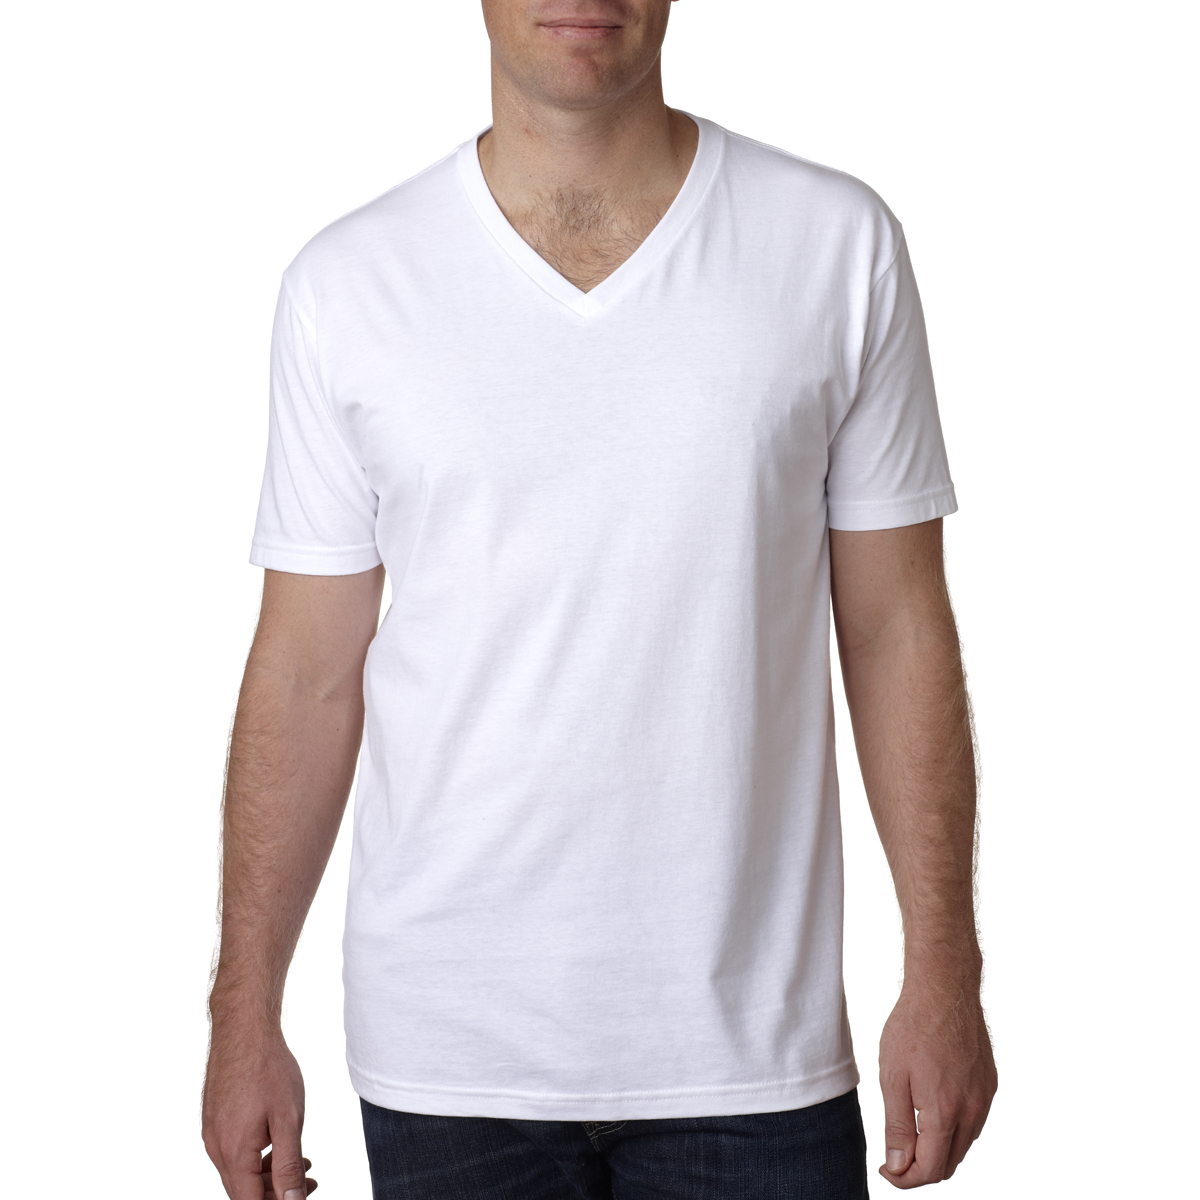 N3200 Next Level Premium Fitted Short-Sleeve V-Neck T-Shirt